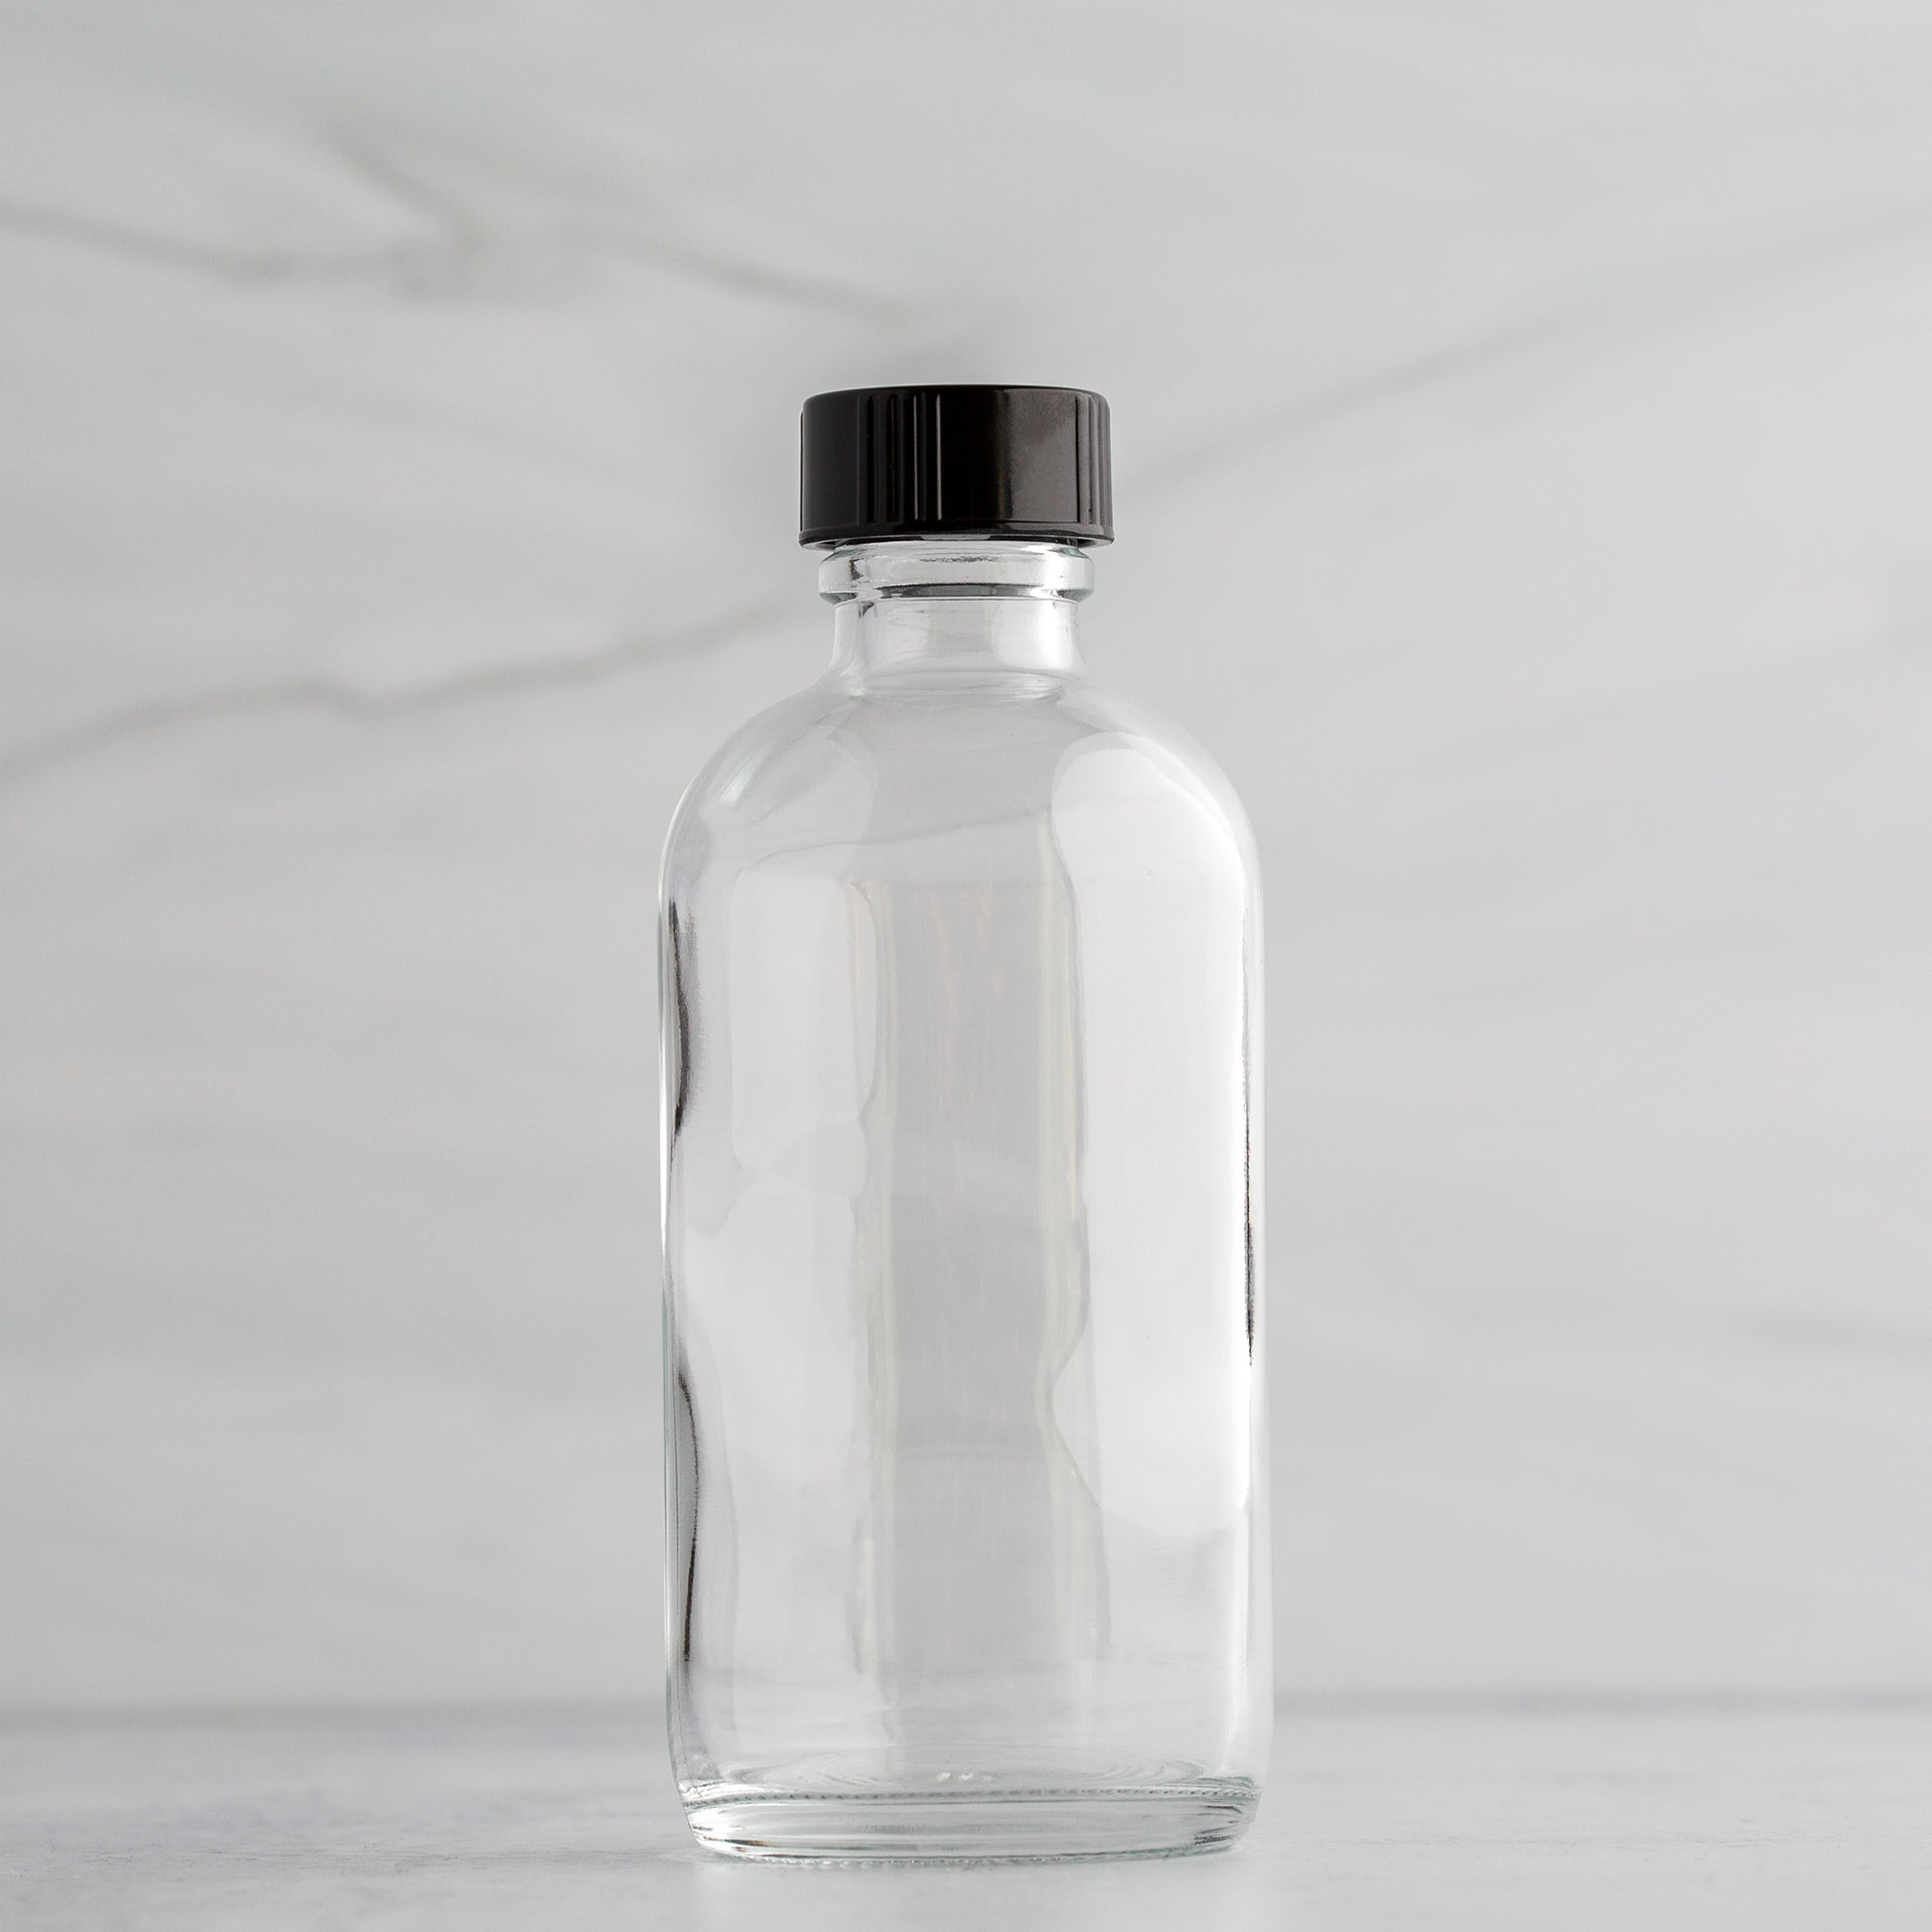 4 oz Clear Glass Bottle with Black Phenolic Cap